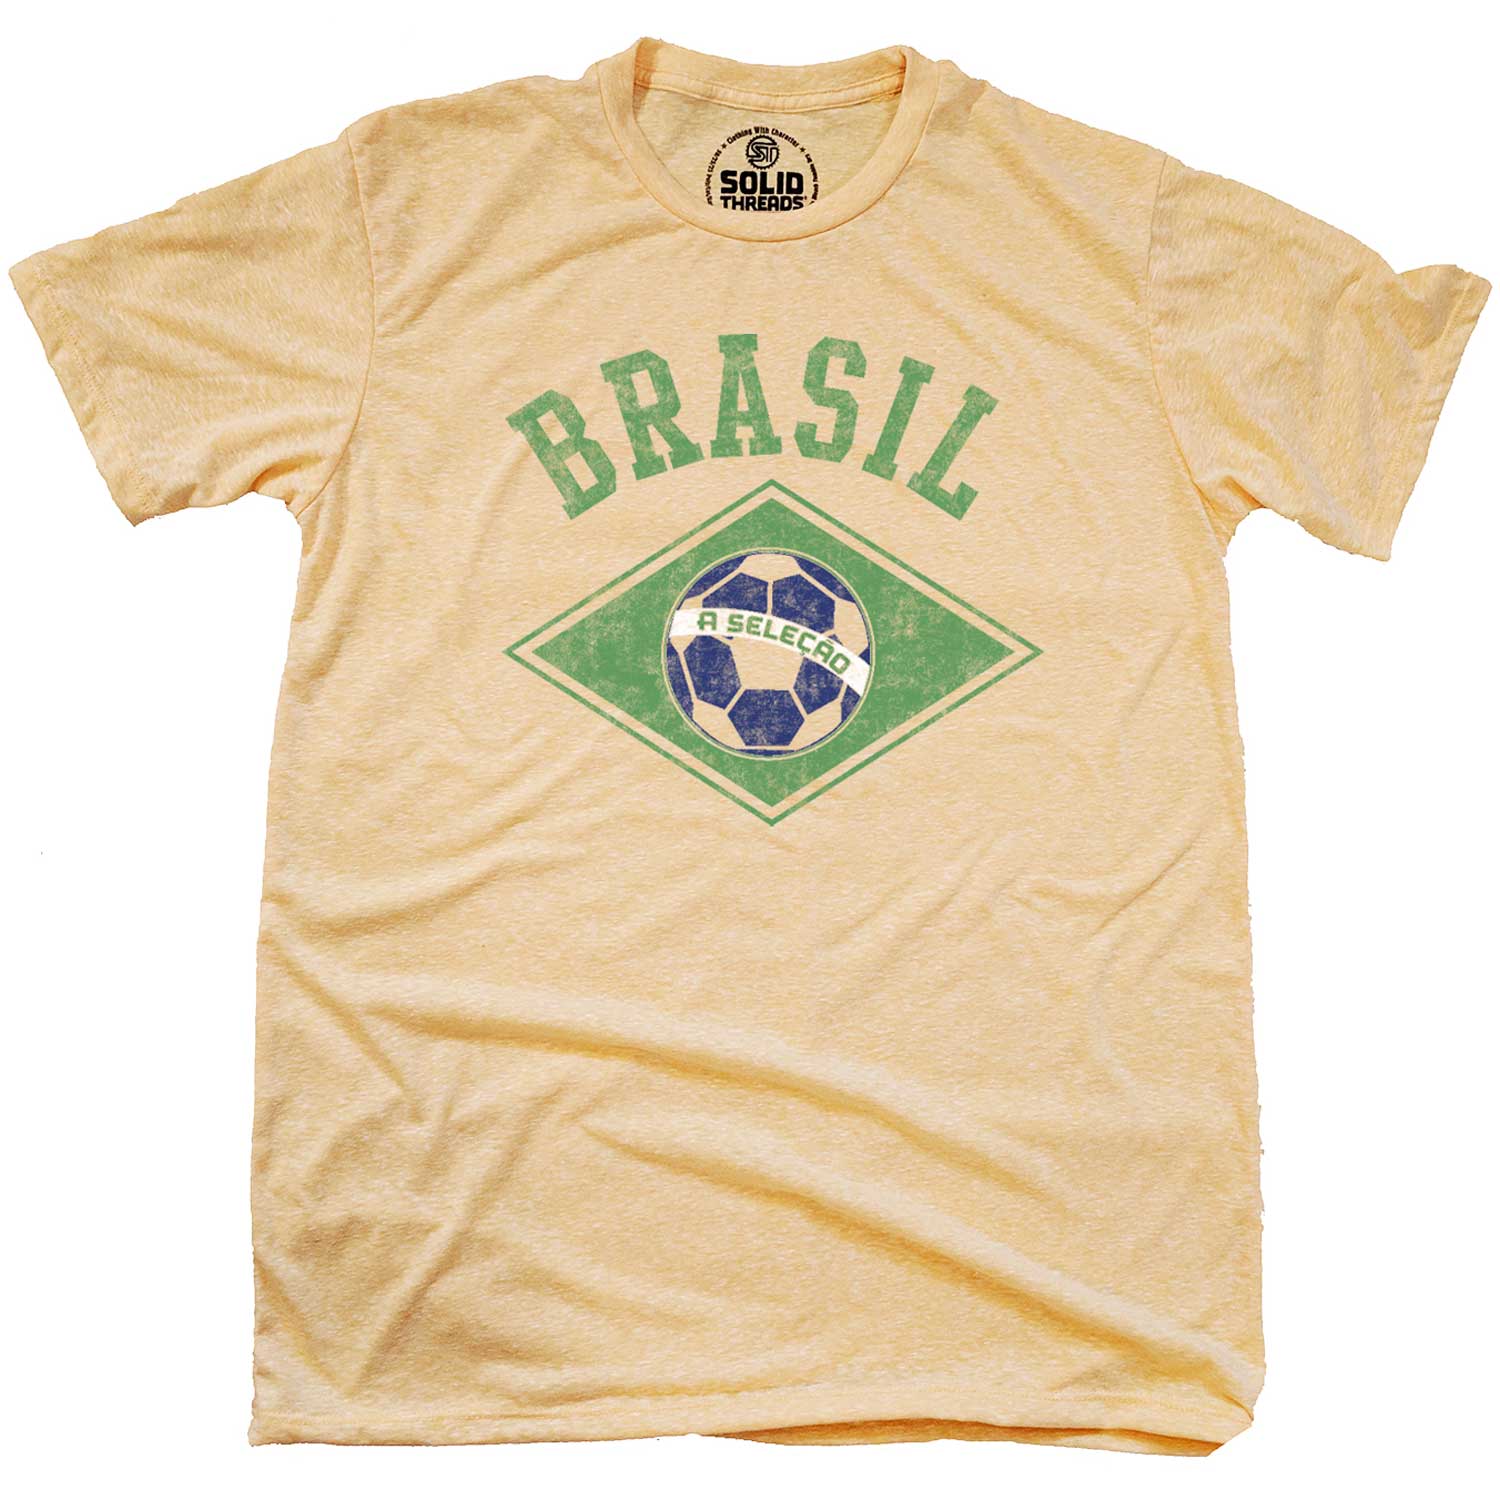 Men's Brazil National Soccer Team Retro Futbol Graphic T-Shirt | Cool Canarinho Tee | Solid Threads